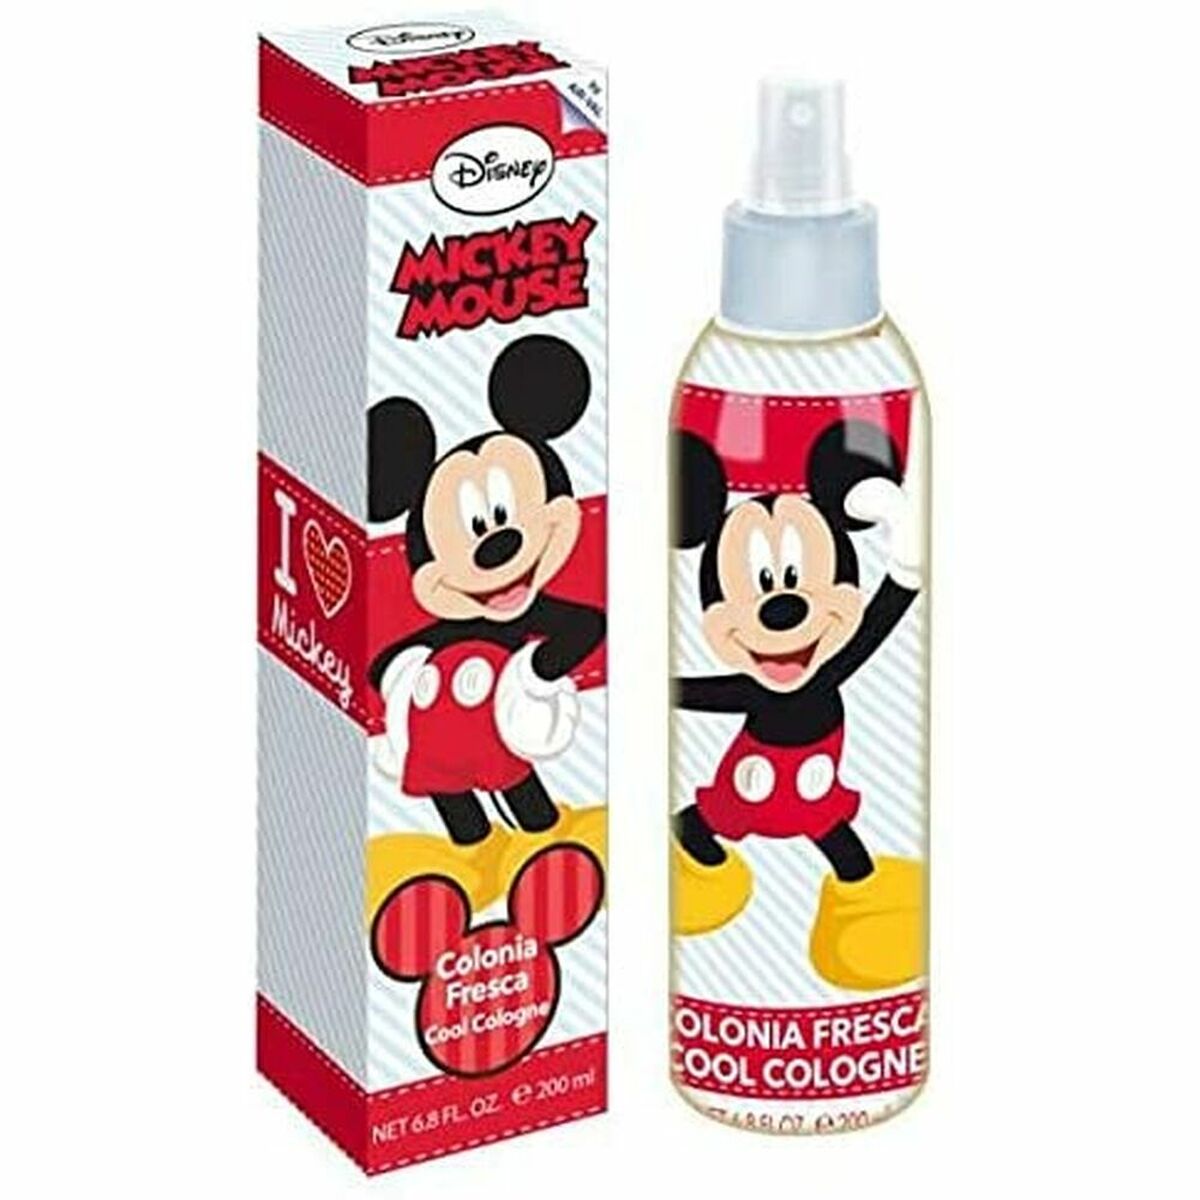 Body Mist Mickey Mouse (200 ml)